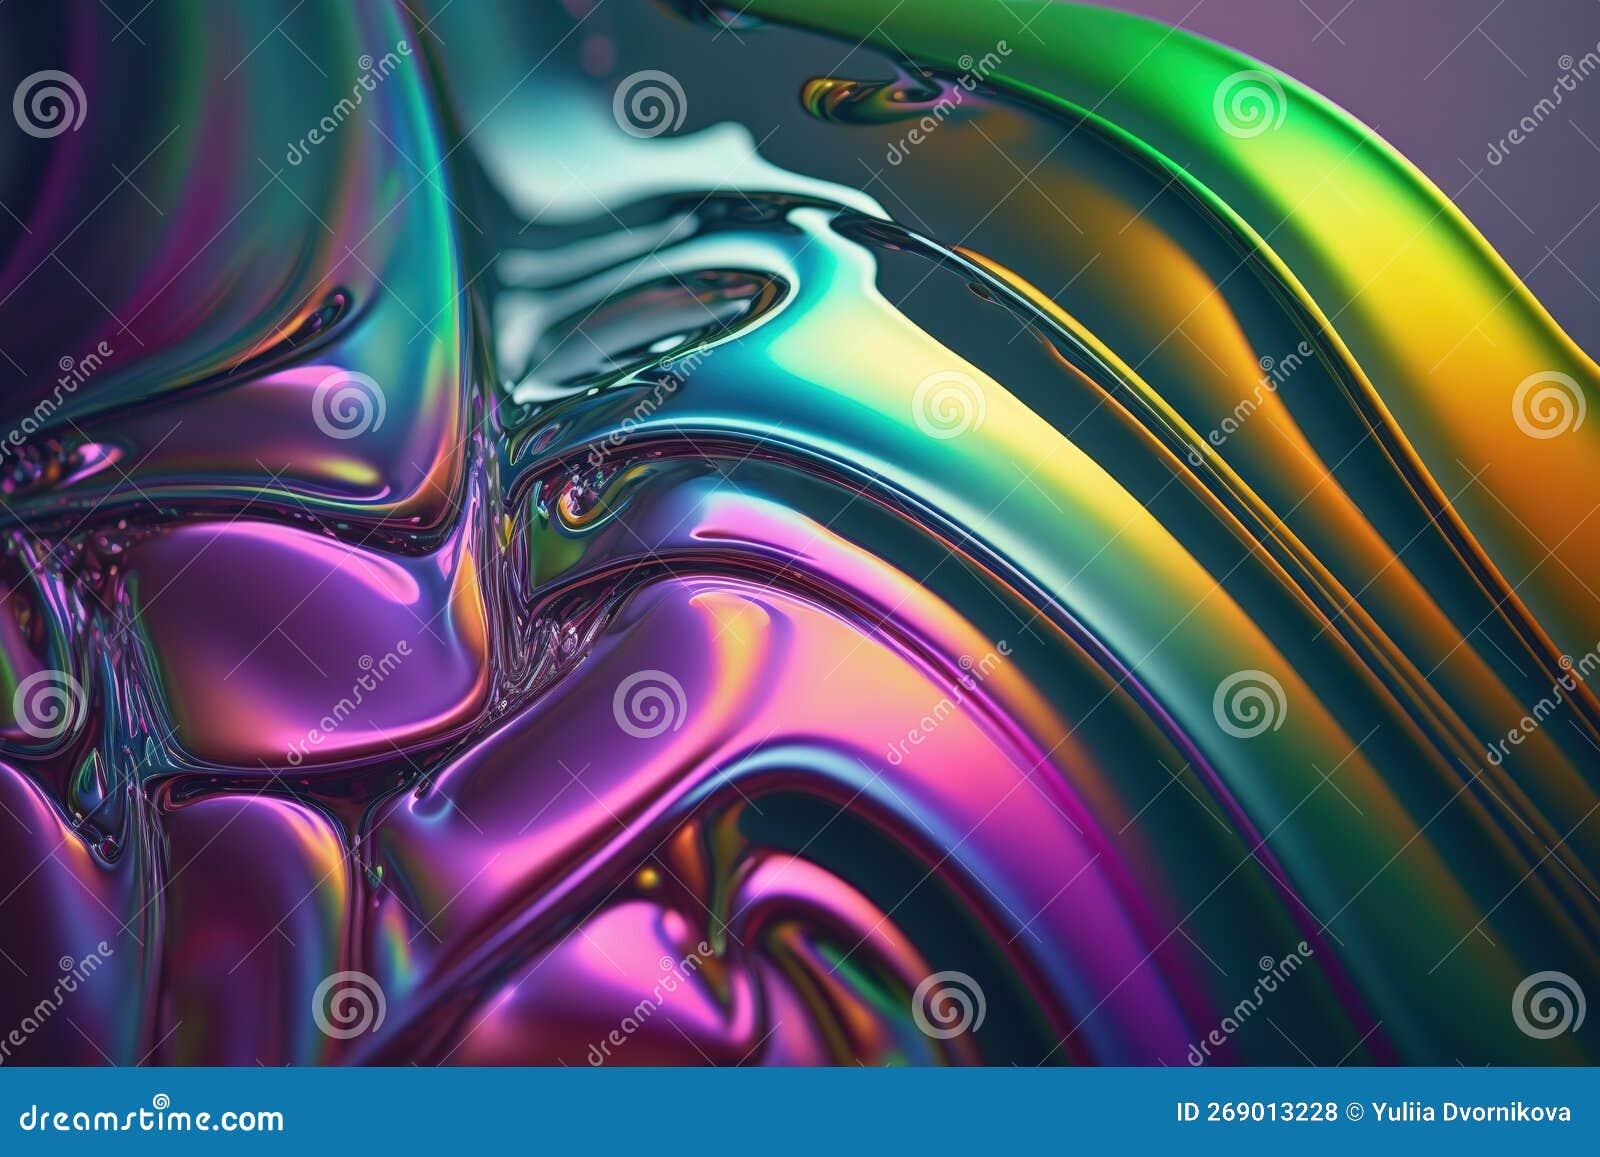 Iridescent Paint Colorful Vivid Background. Liquid Splashes and